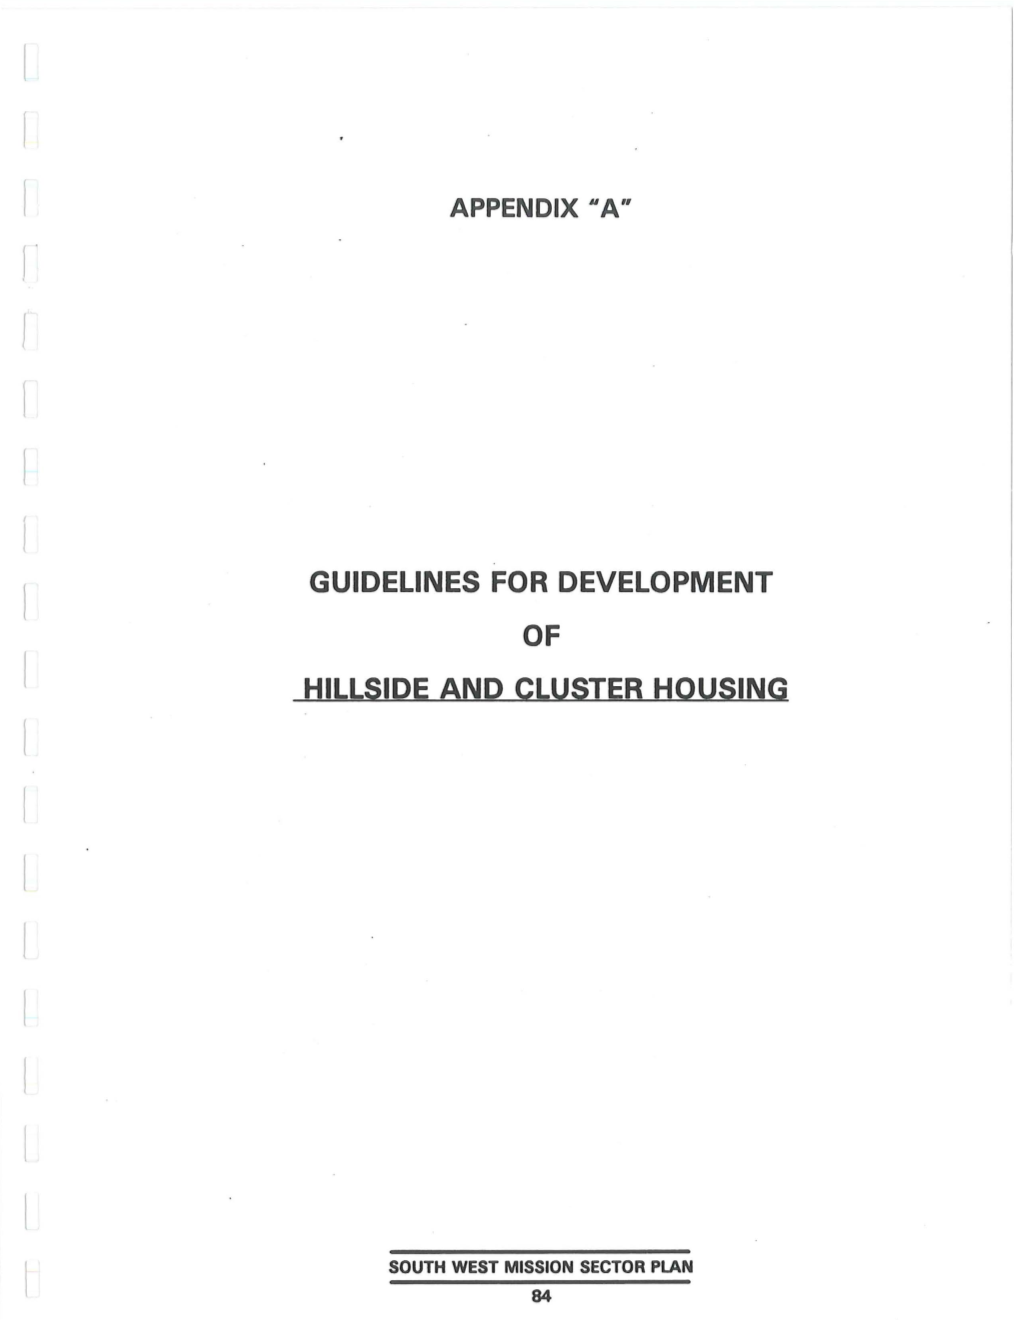 Guidelines for Development of Hillside and Cluster Housing